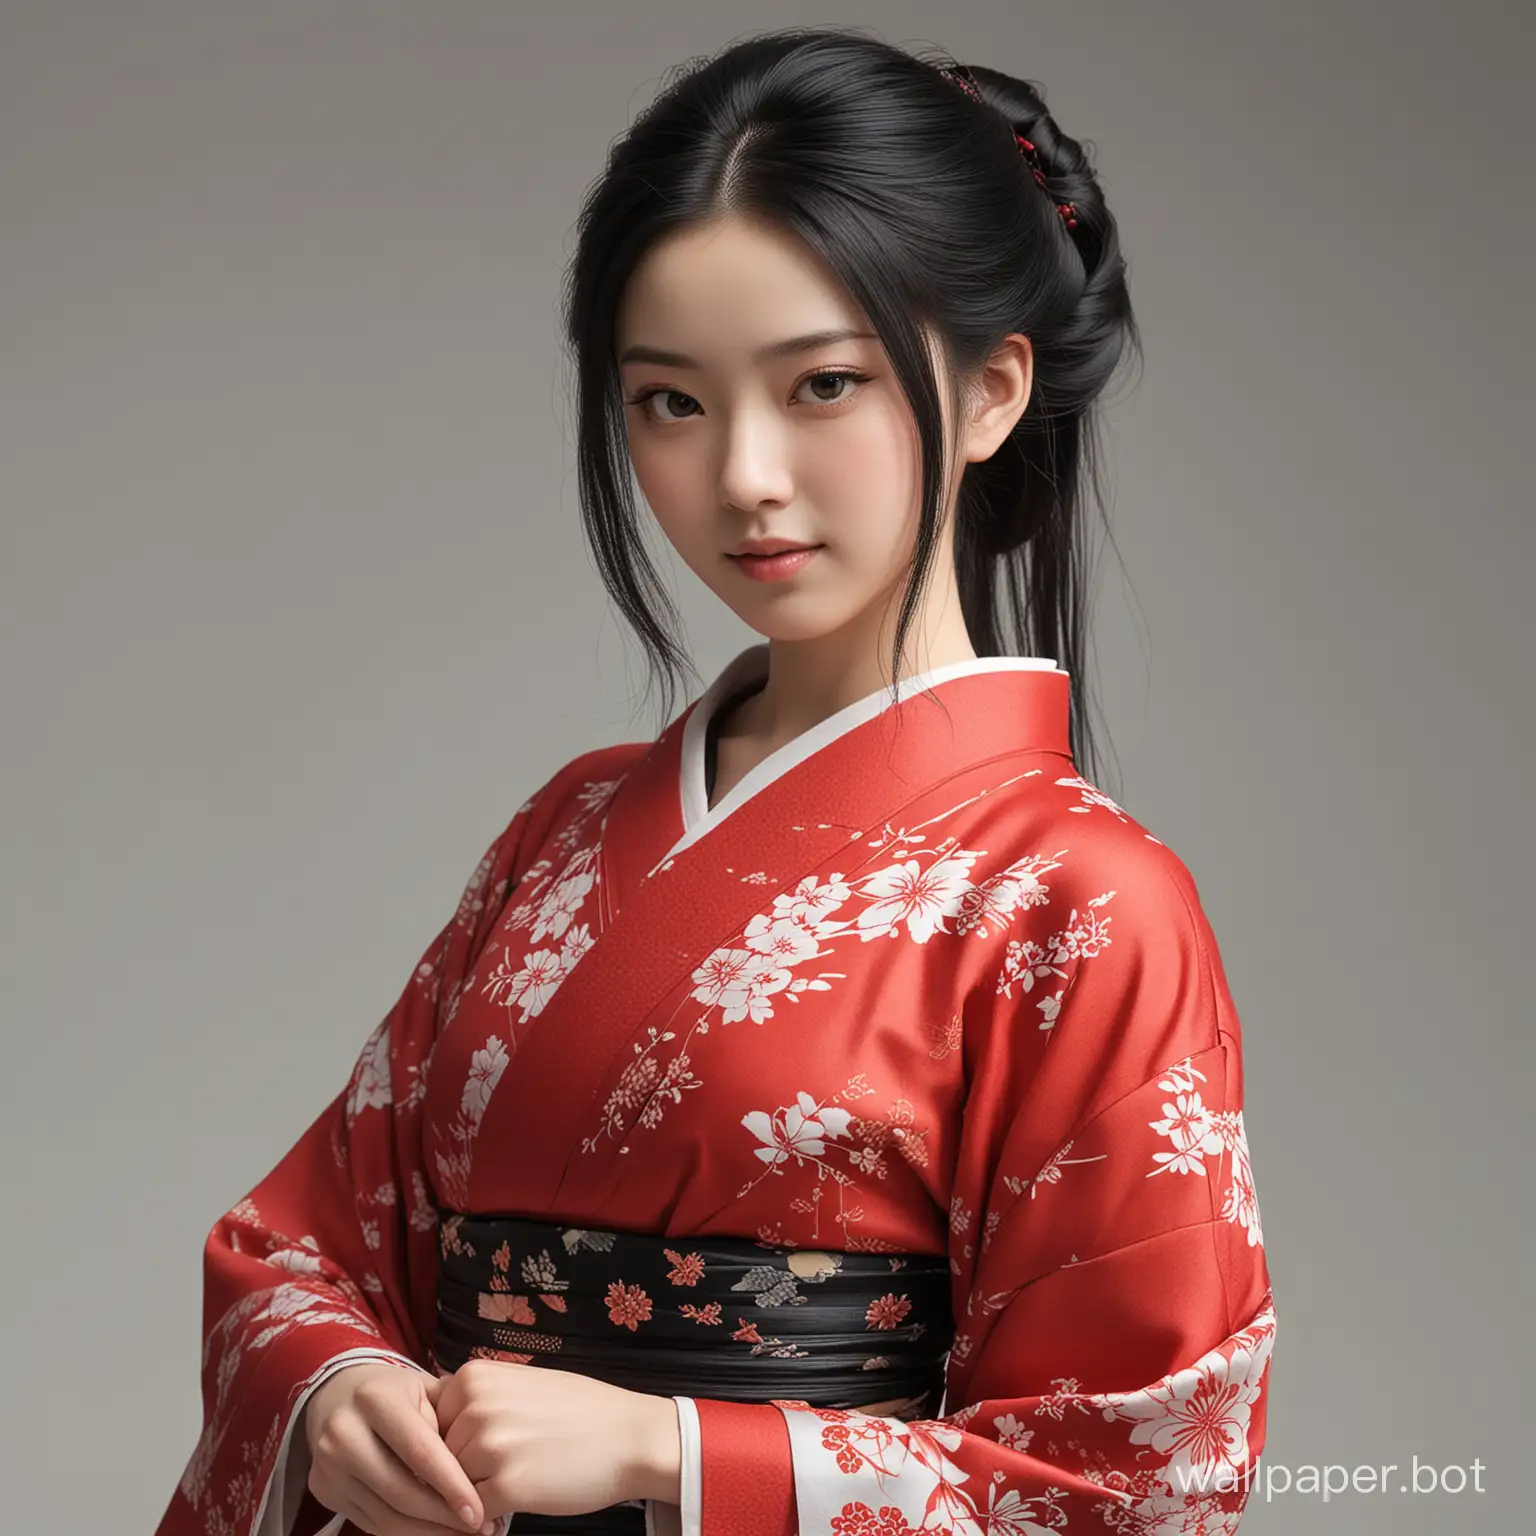 photorealism, porcelain skin, japan girl, graceful forms, kind eyes, perfect figure, slight smile. long black hair. red short kimono.